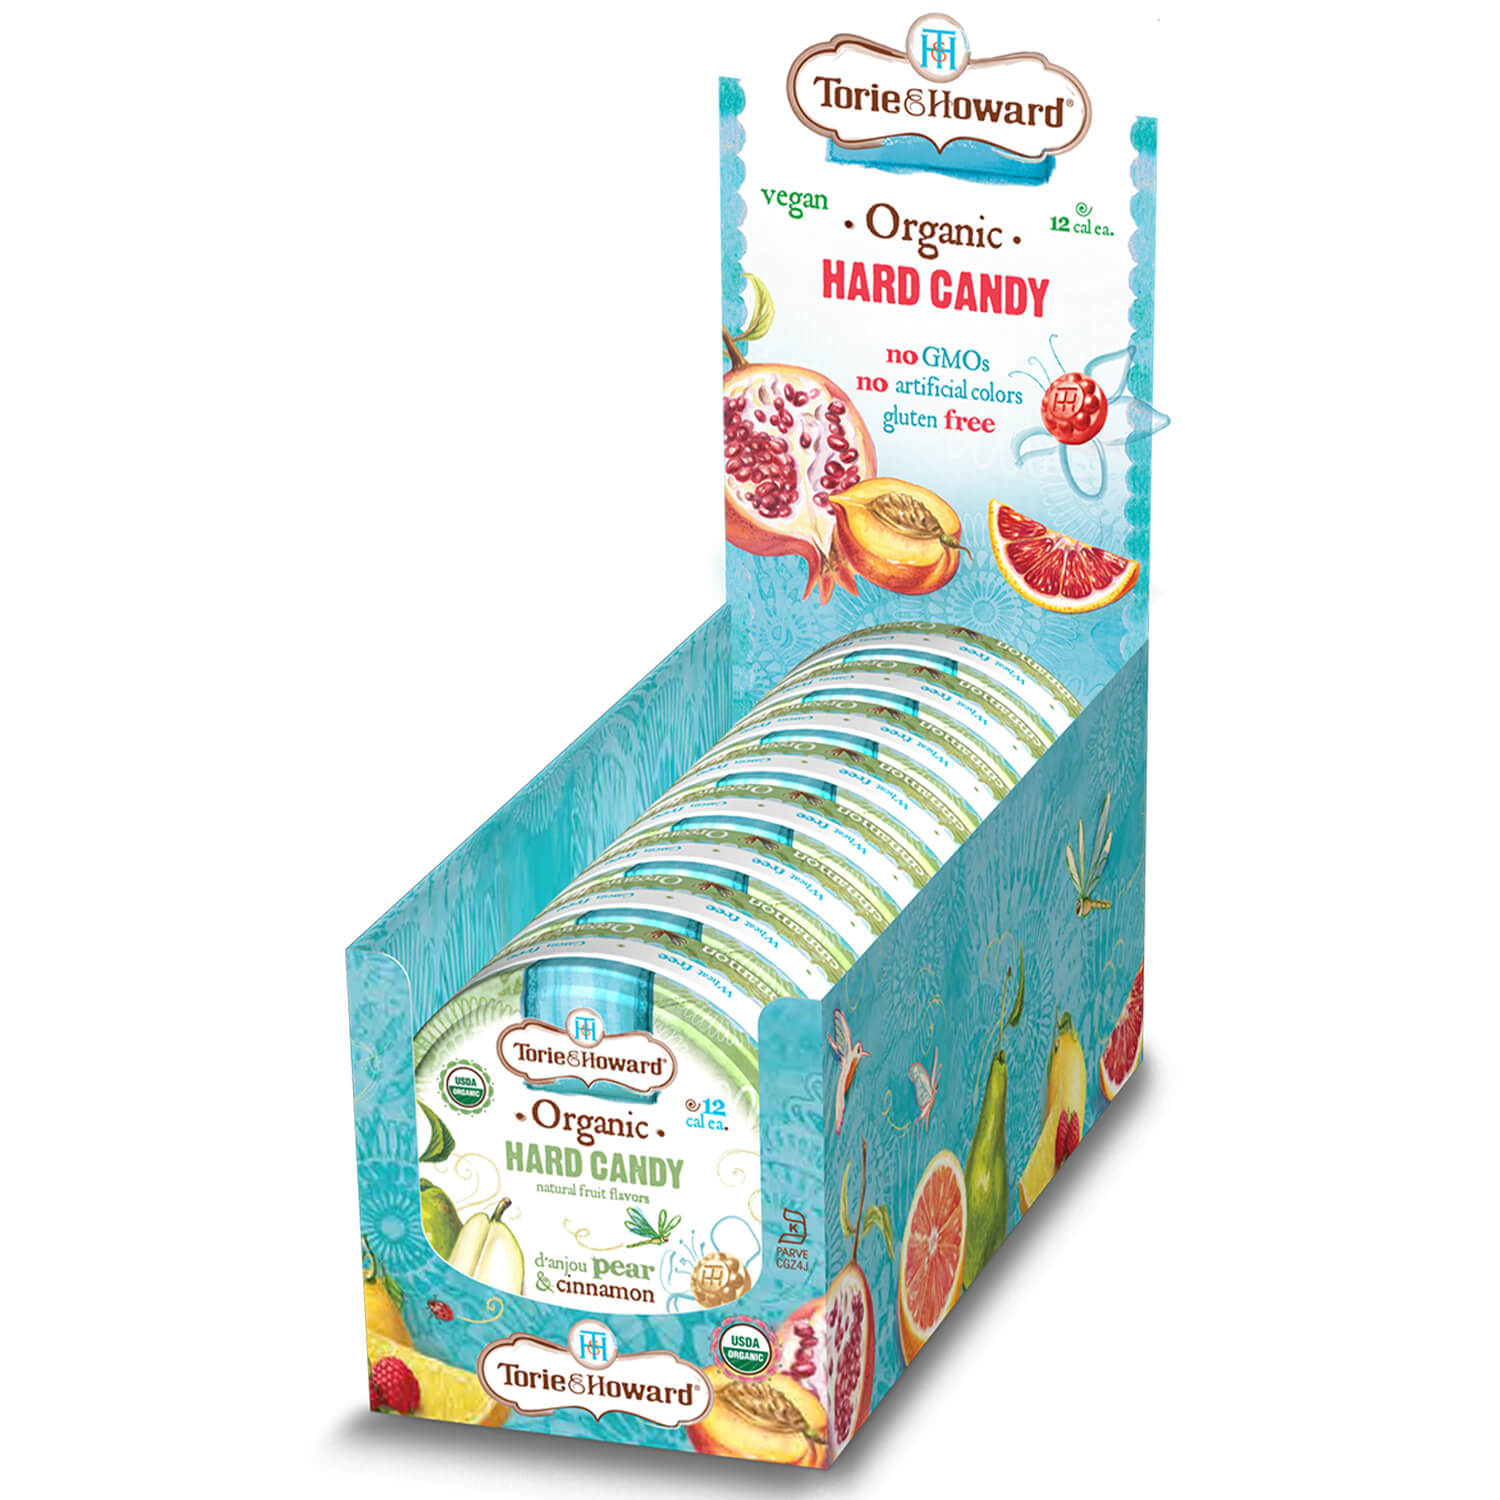 Wholesale Torie & Howard Pear and Cinnamon Organic Hard Candy Tins 2 oz Bulk